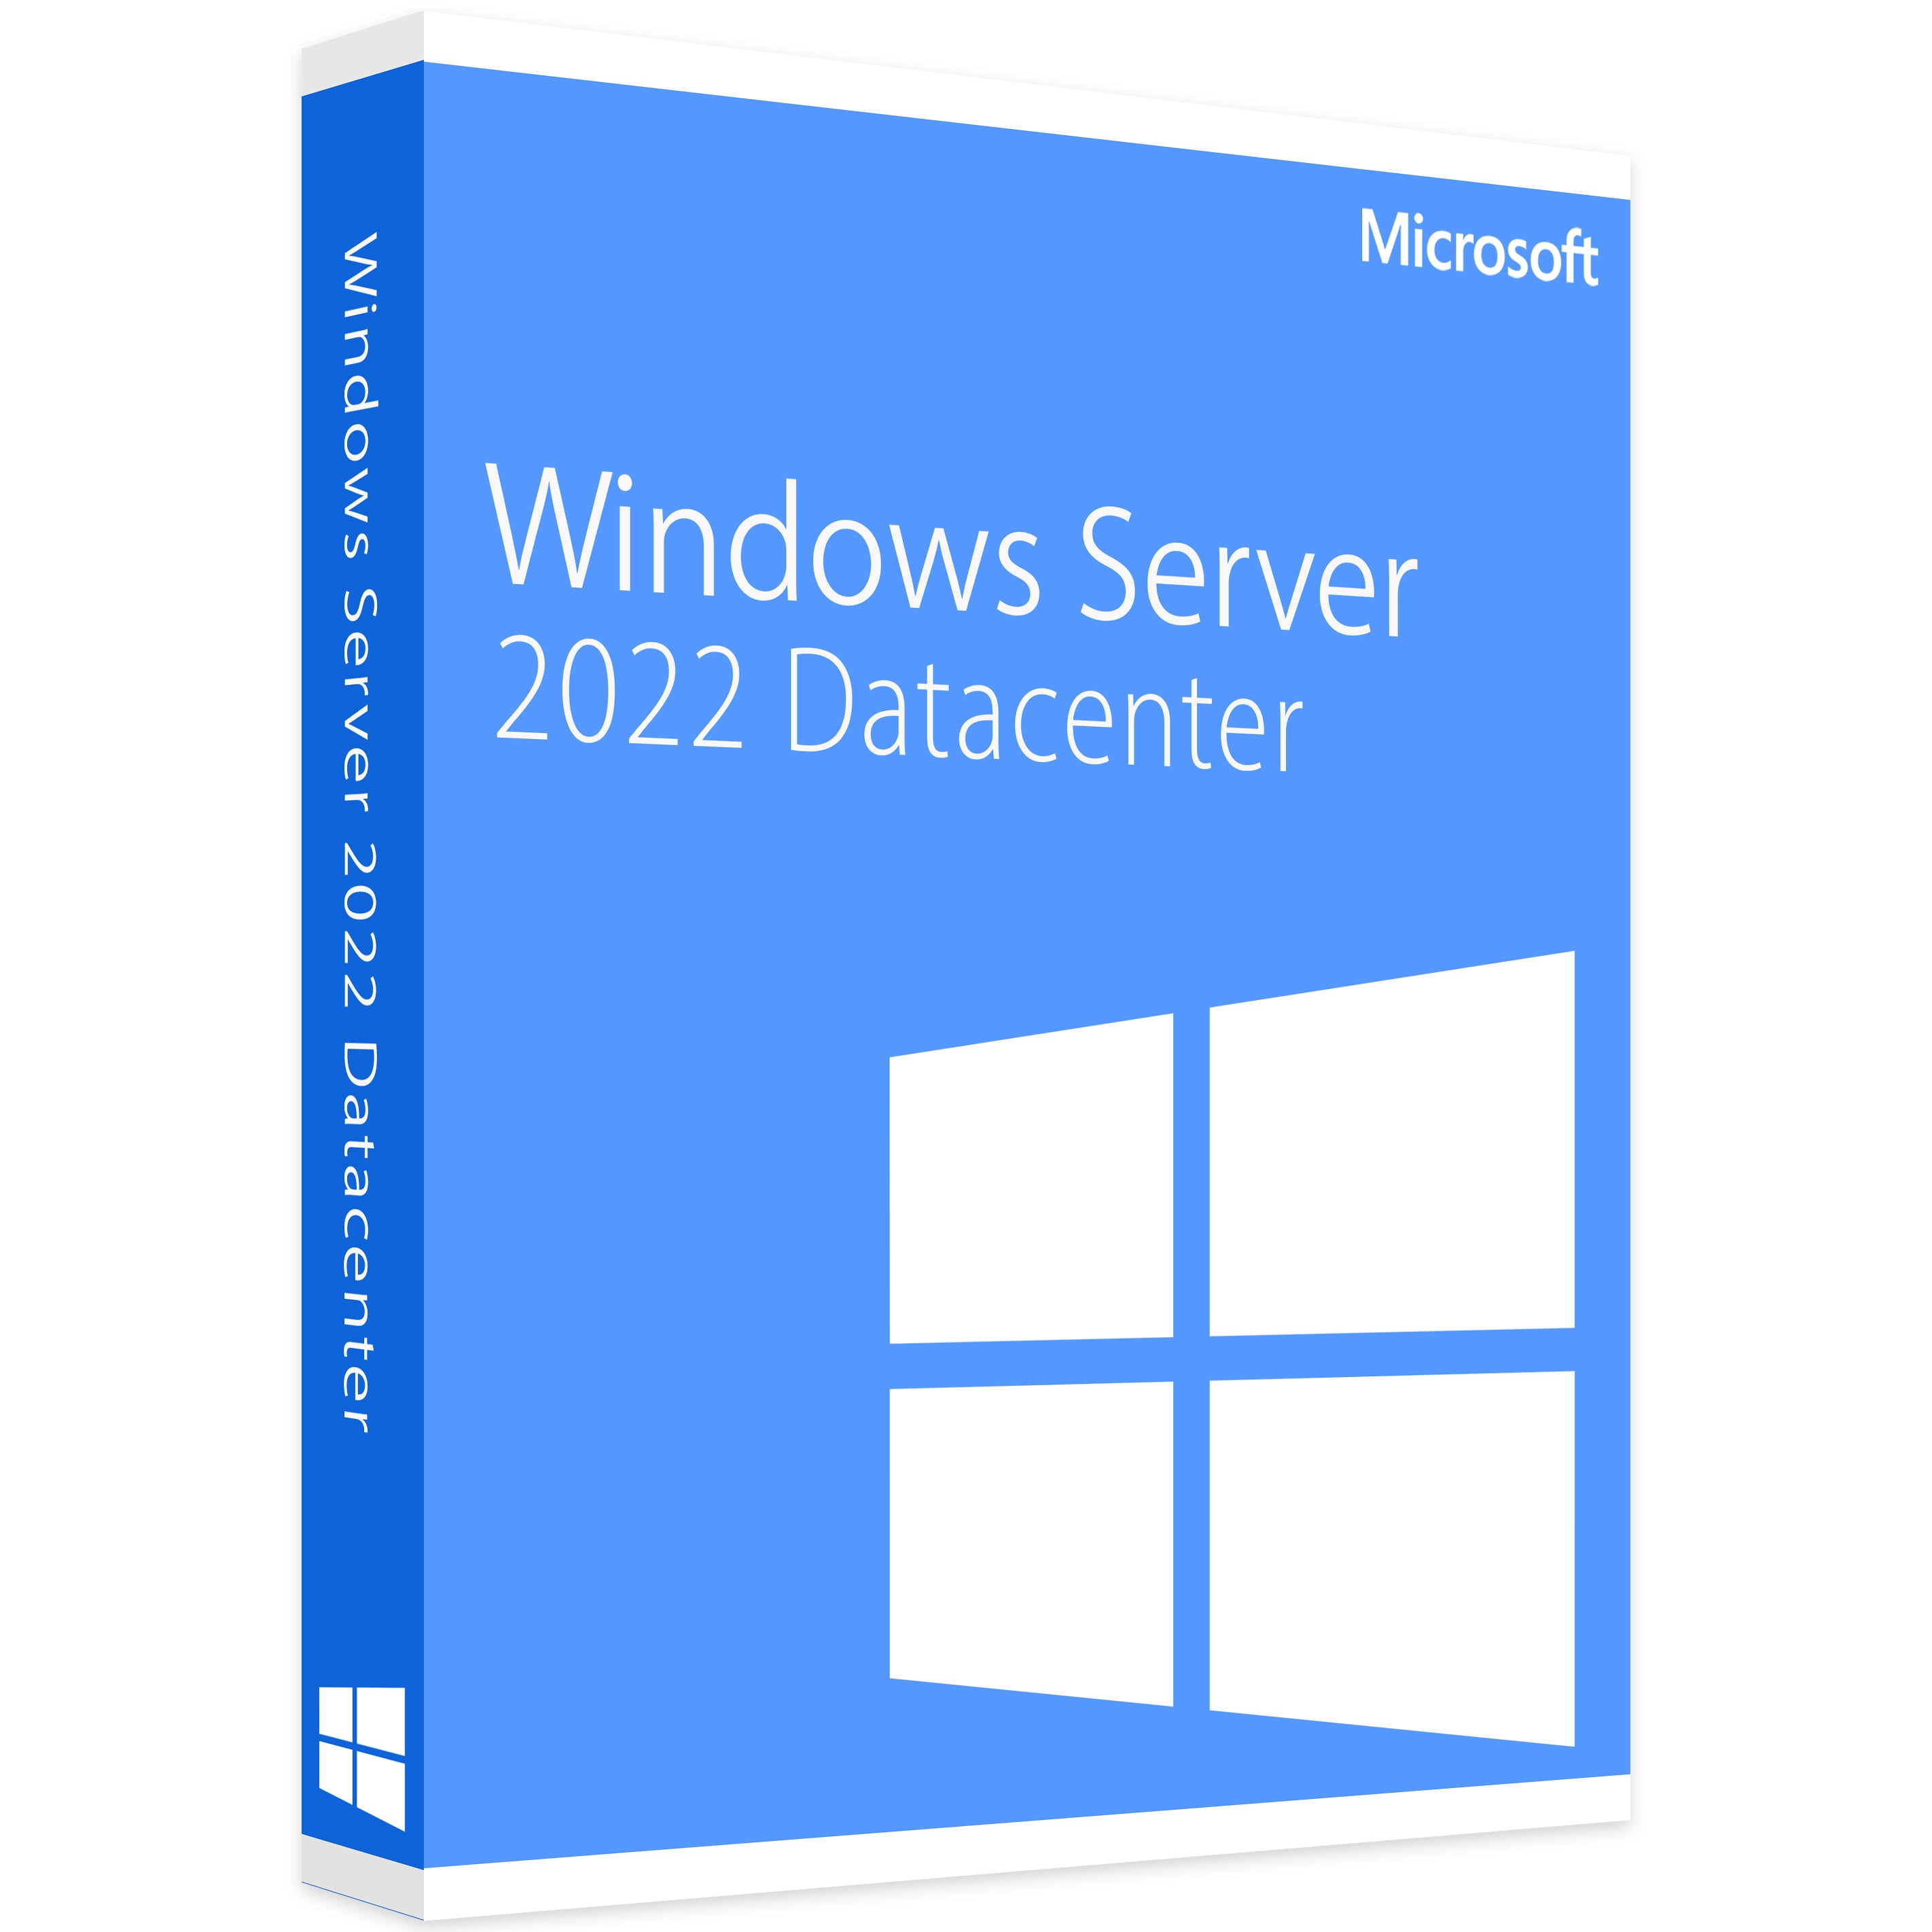 Microsoft Windows Server 2022 Datacenter - Lifetime license 1PC